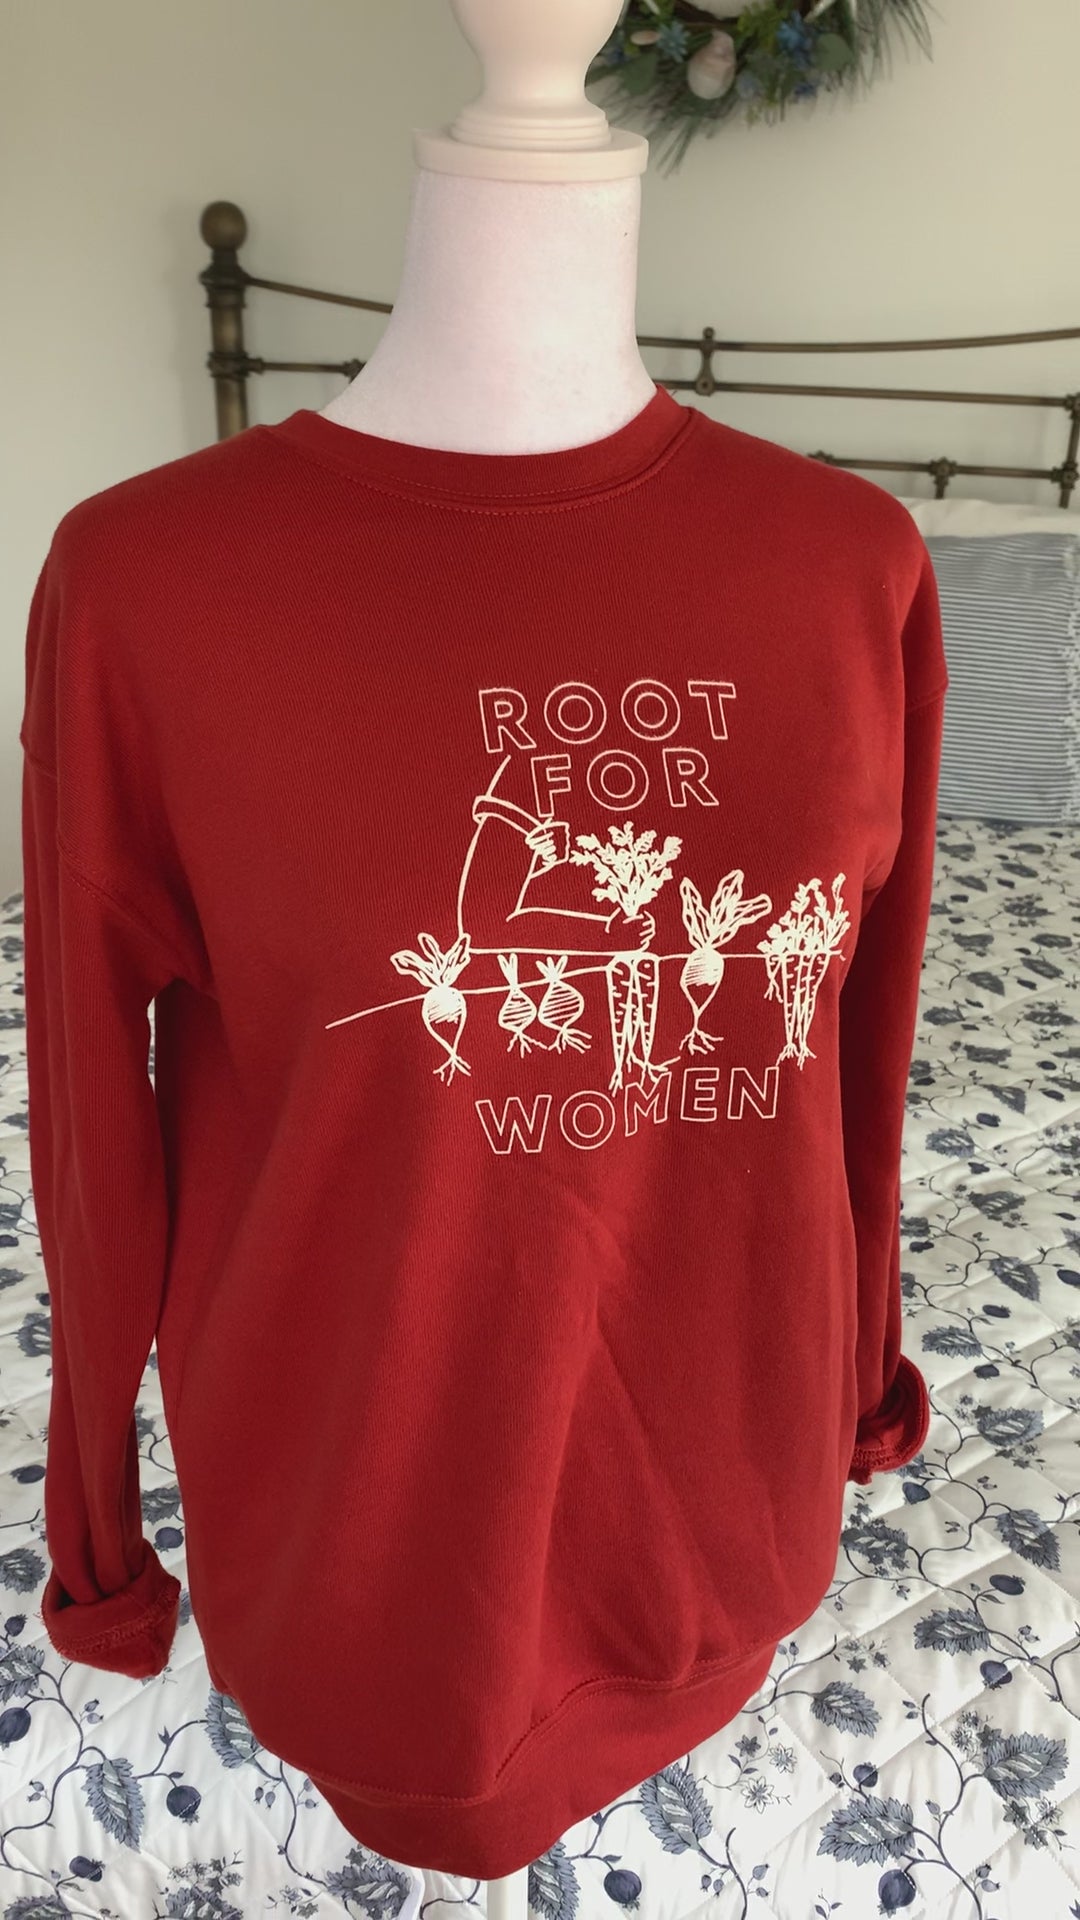 A red sweatshirt that reads "Root for Women" hangs on a manikin